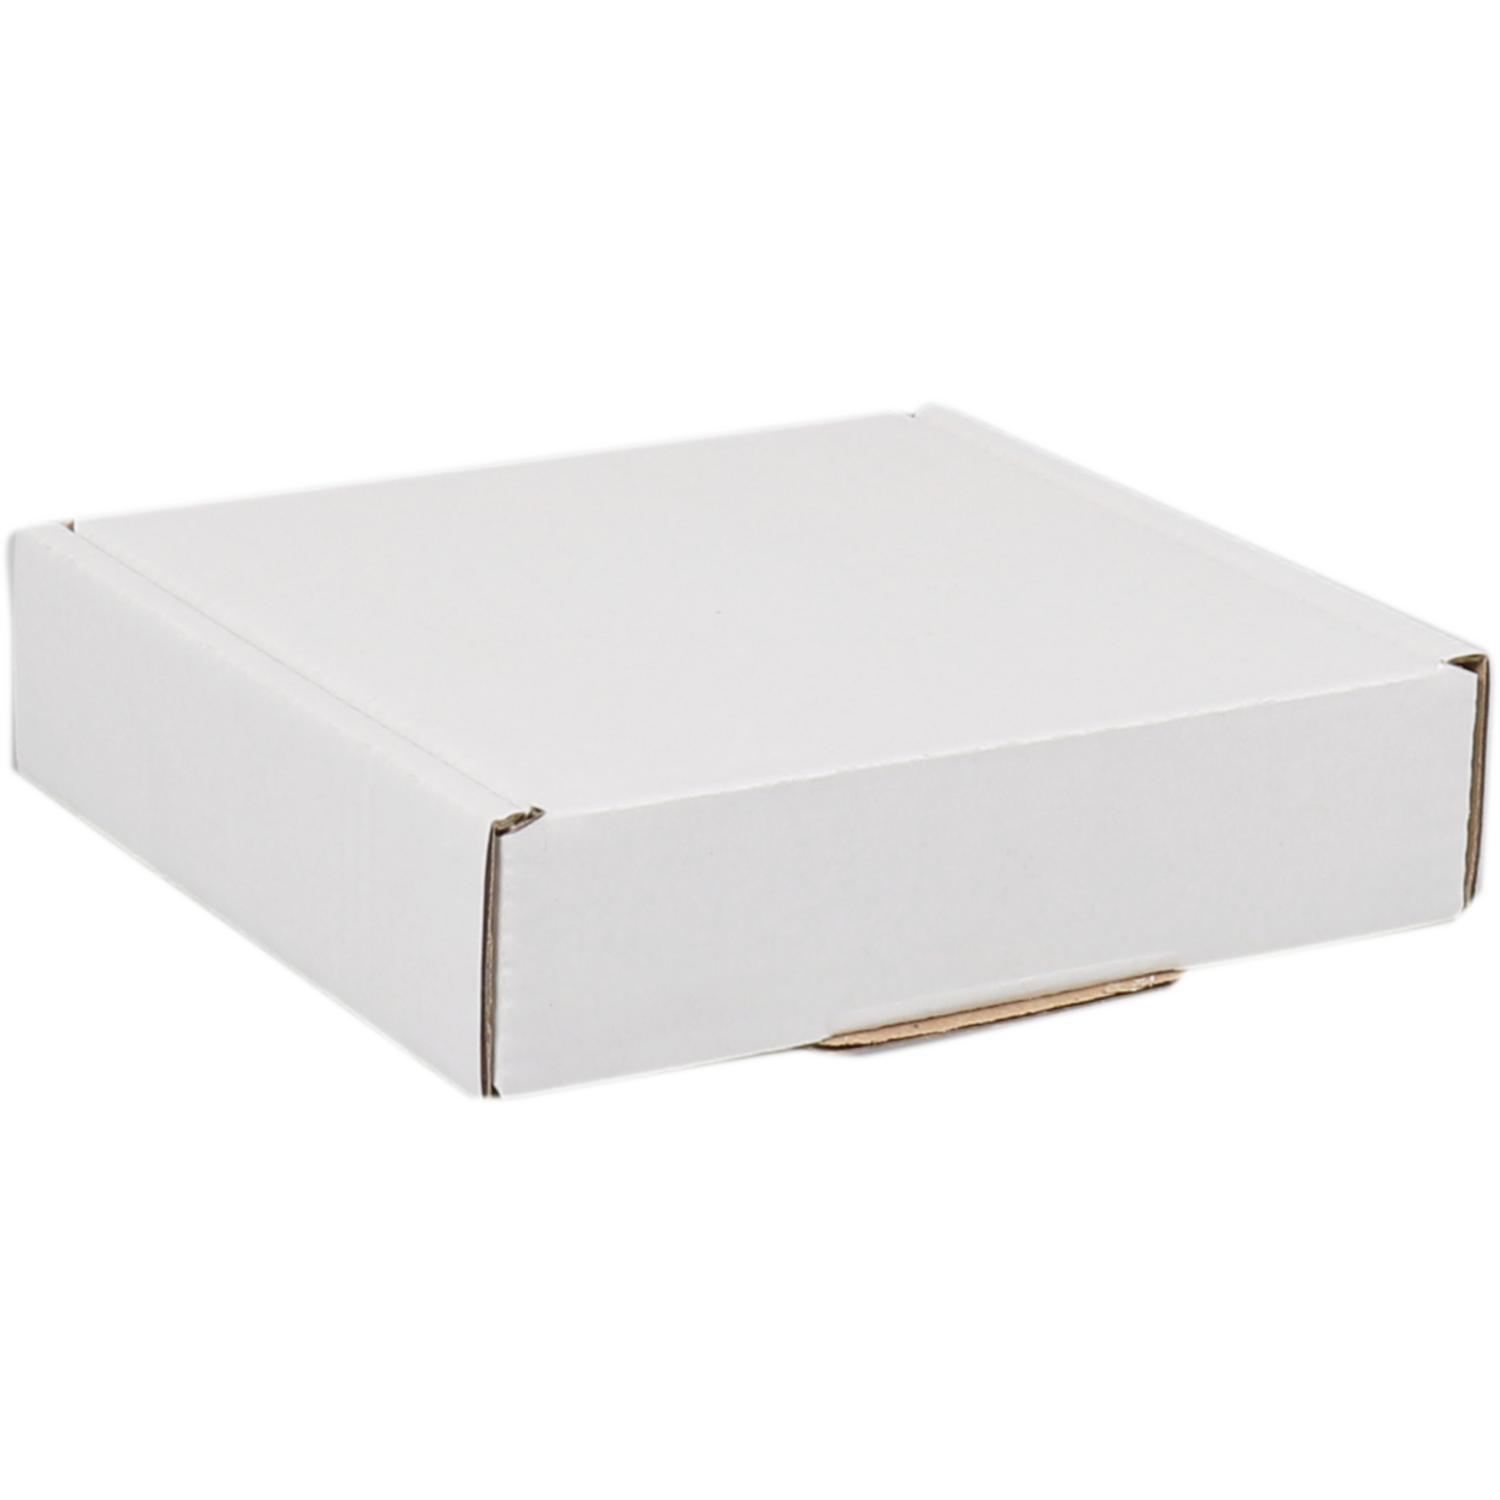  Verzenddoos, carton ondulé, 110x110x28mm, avec rabat, simple cannelure, blanc 1